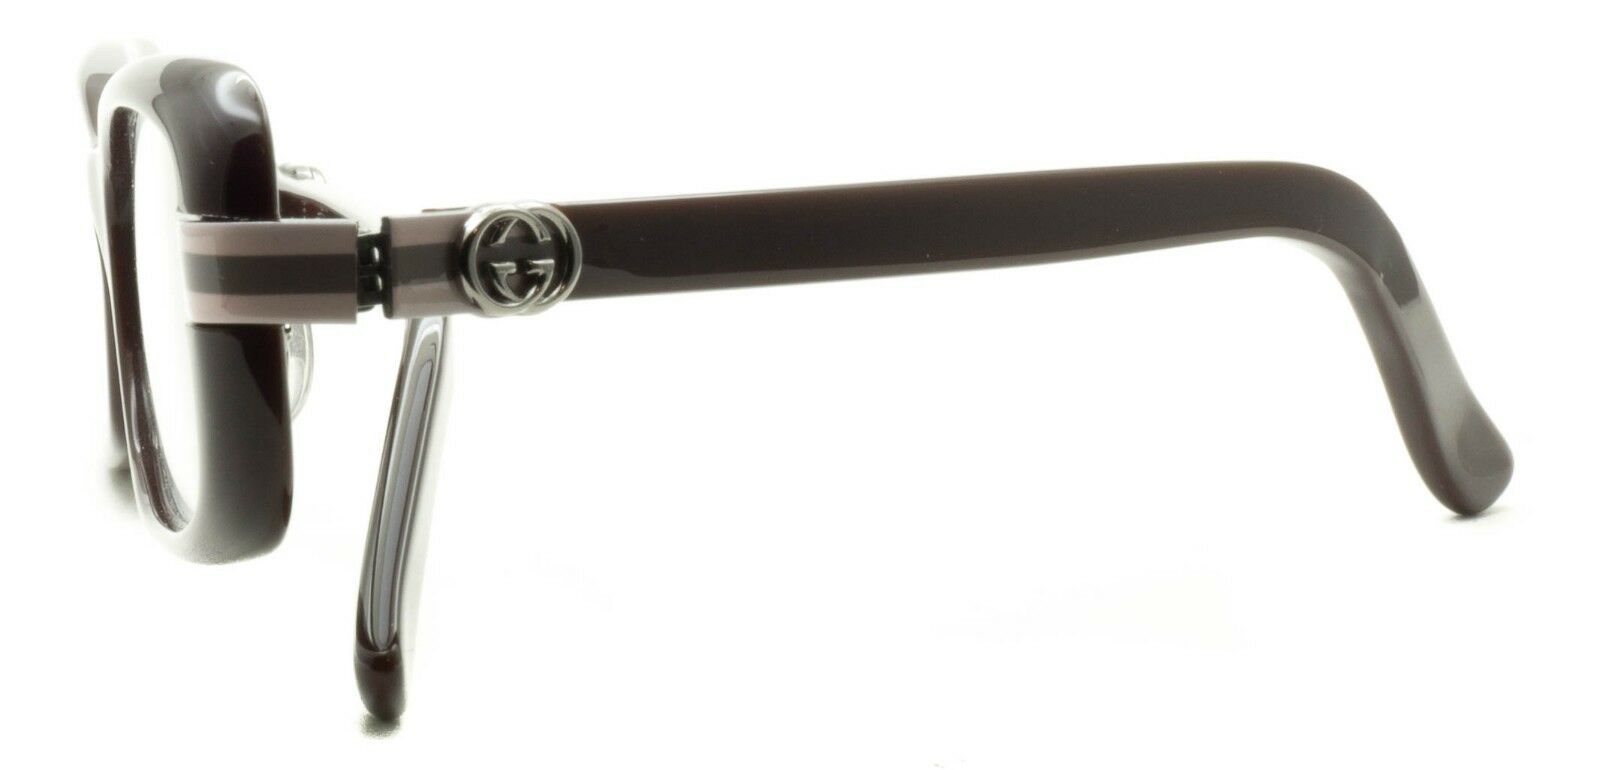 GUCCI GG 3529/U/F PJQ Eyewear FRAMES NEW RX Optical Glasses Eyeglasses - ITALY